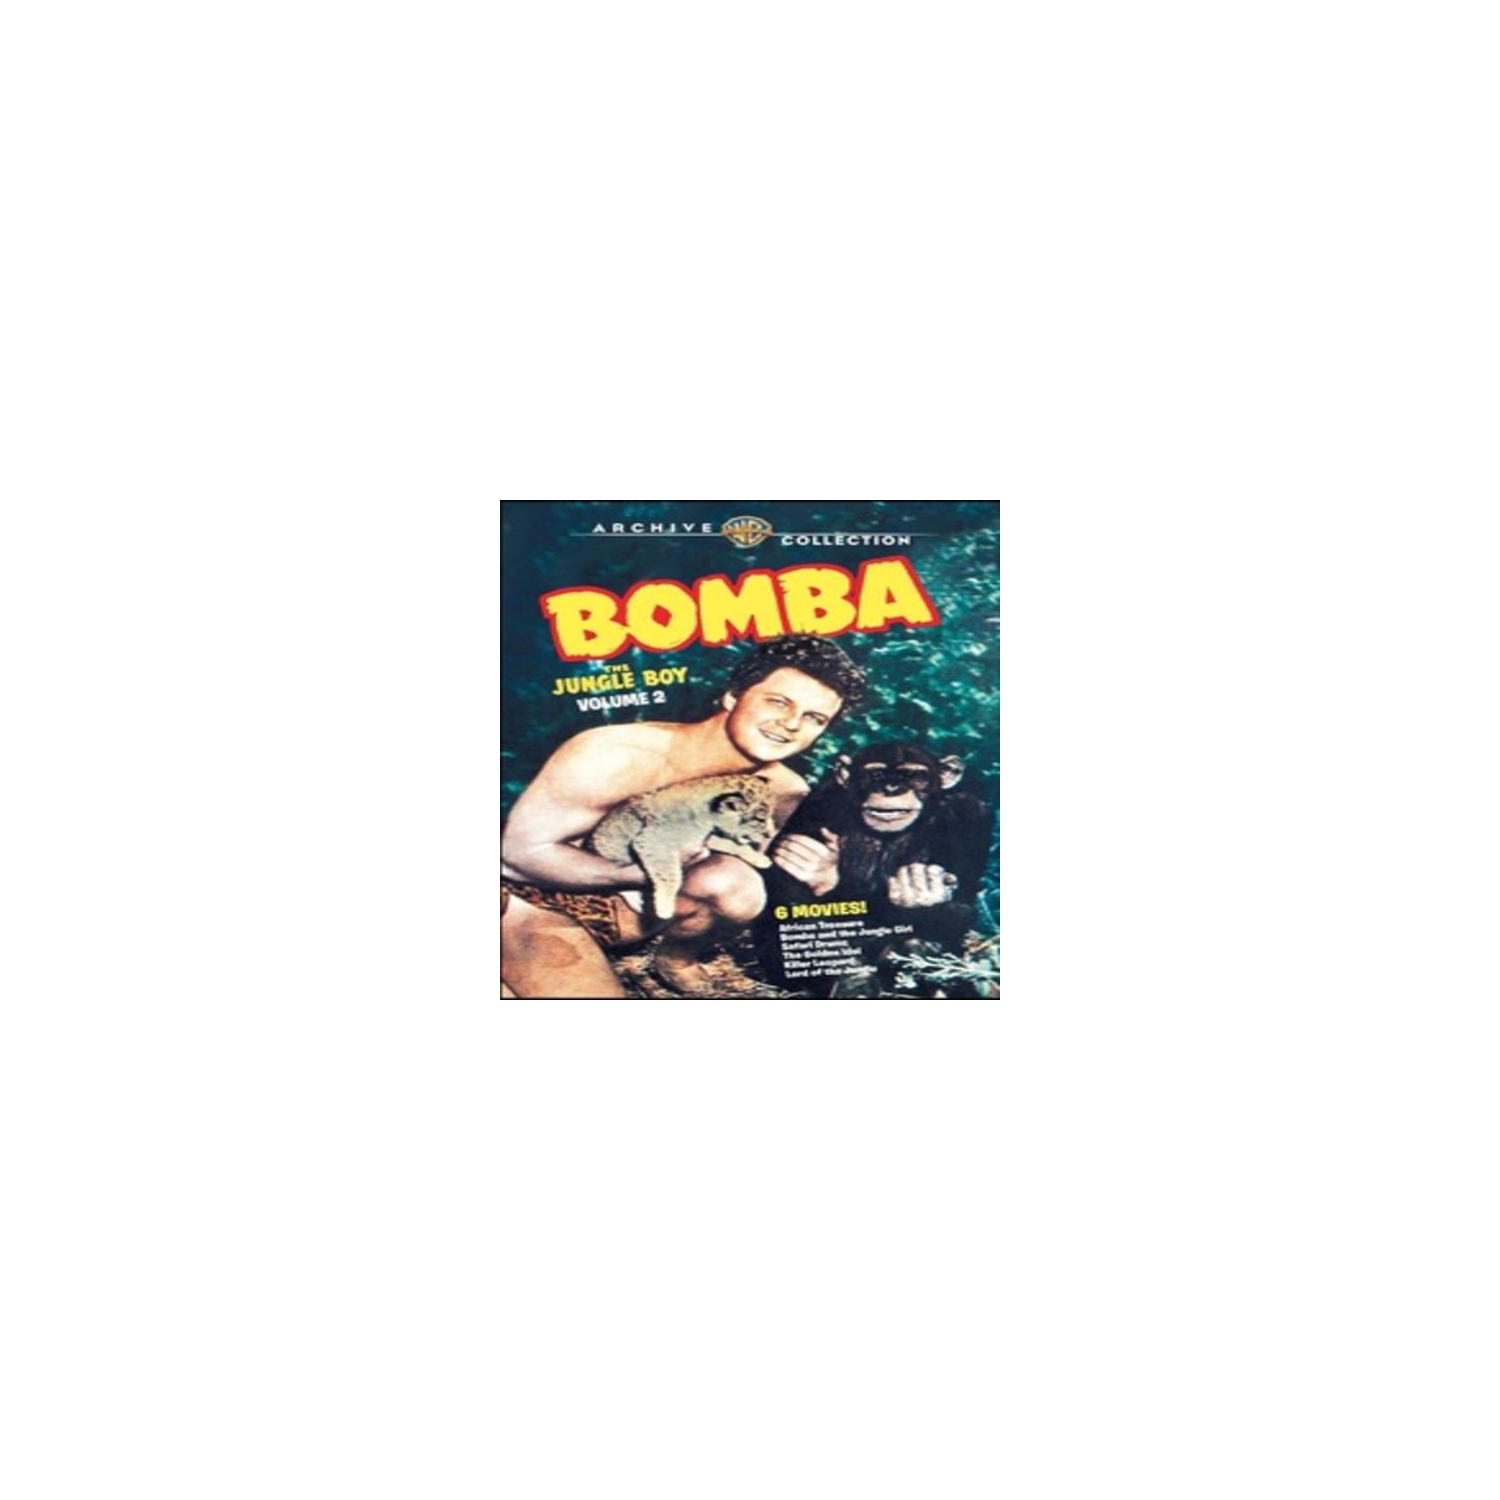 Allied Vaughn 883316844083 Bomba The Jungle Boy: Volume 2